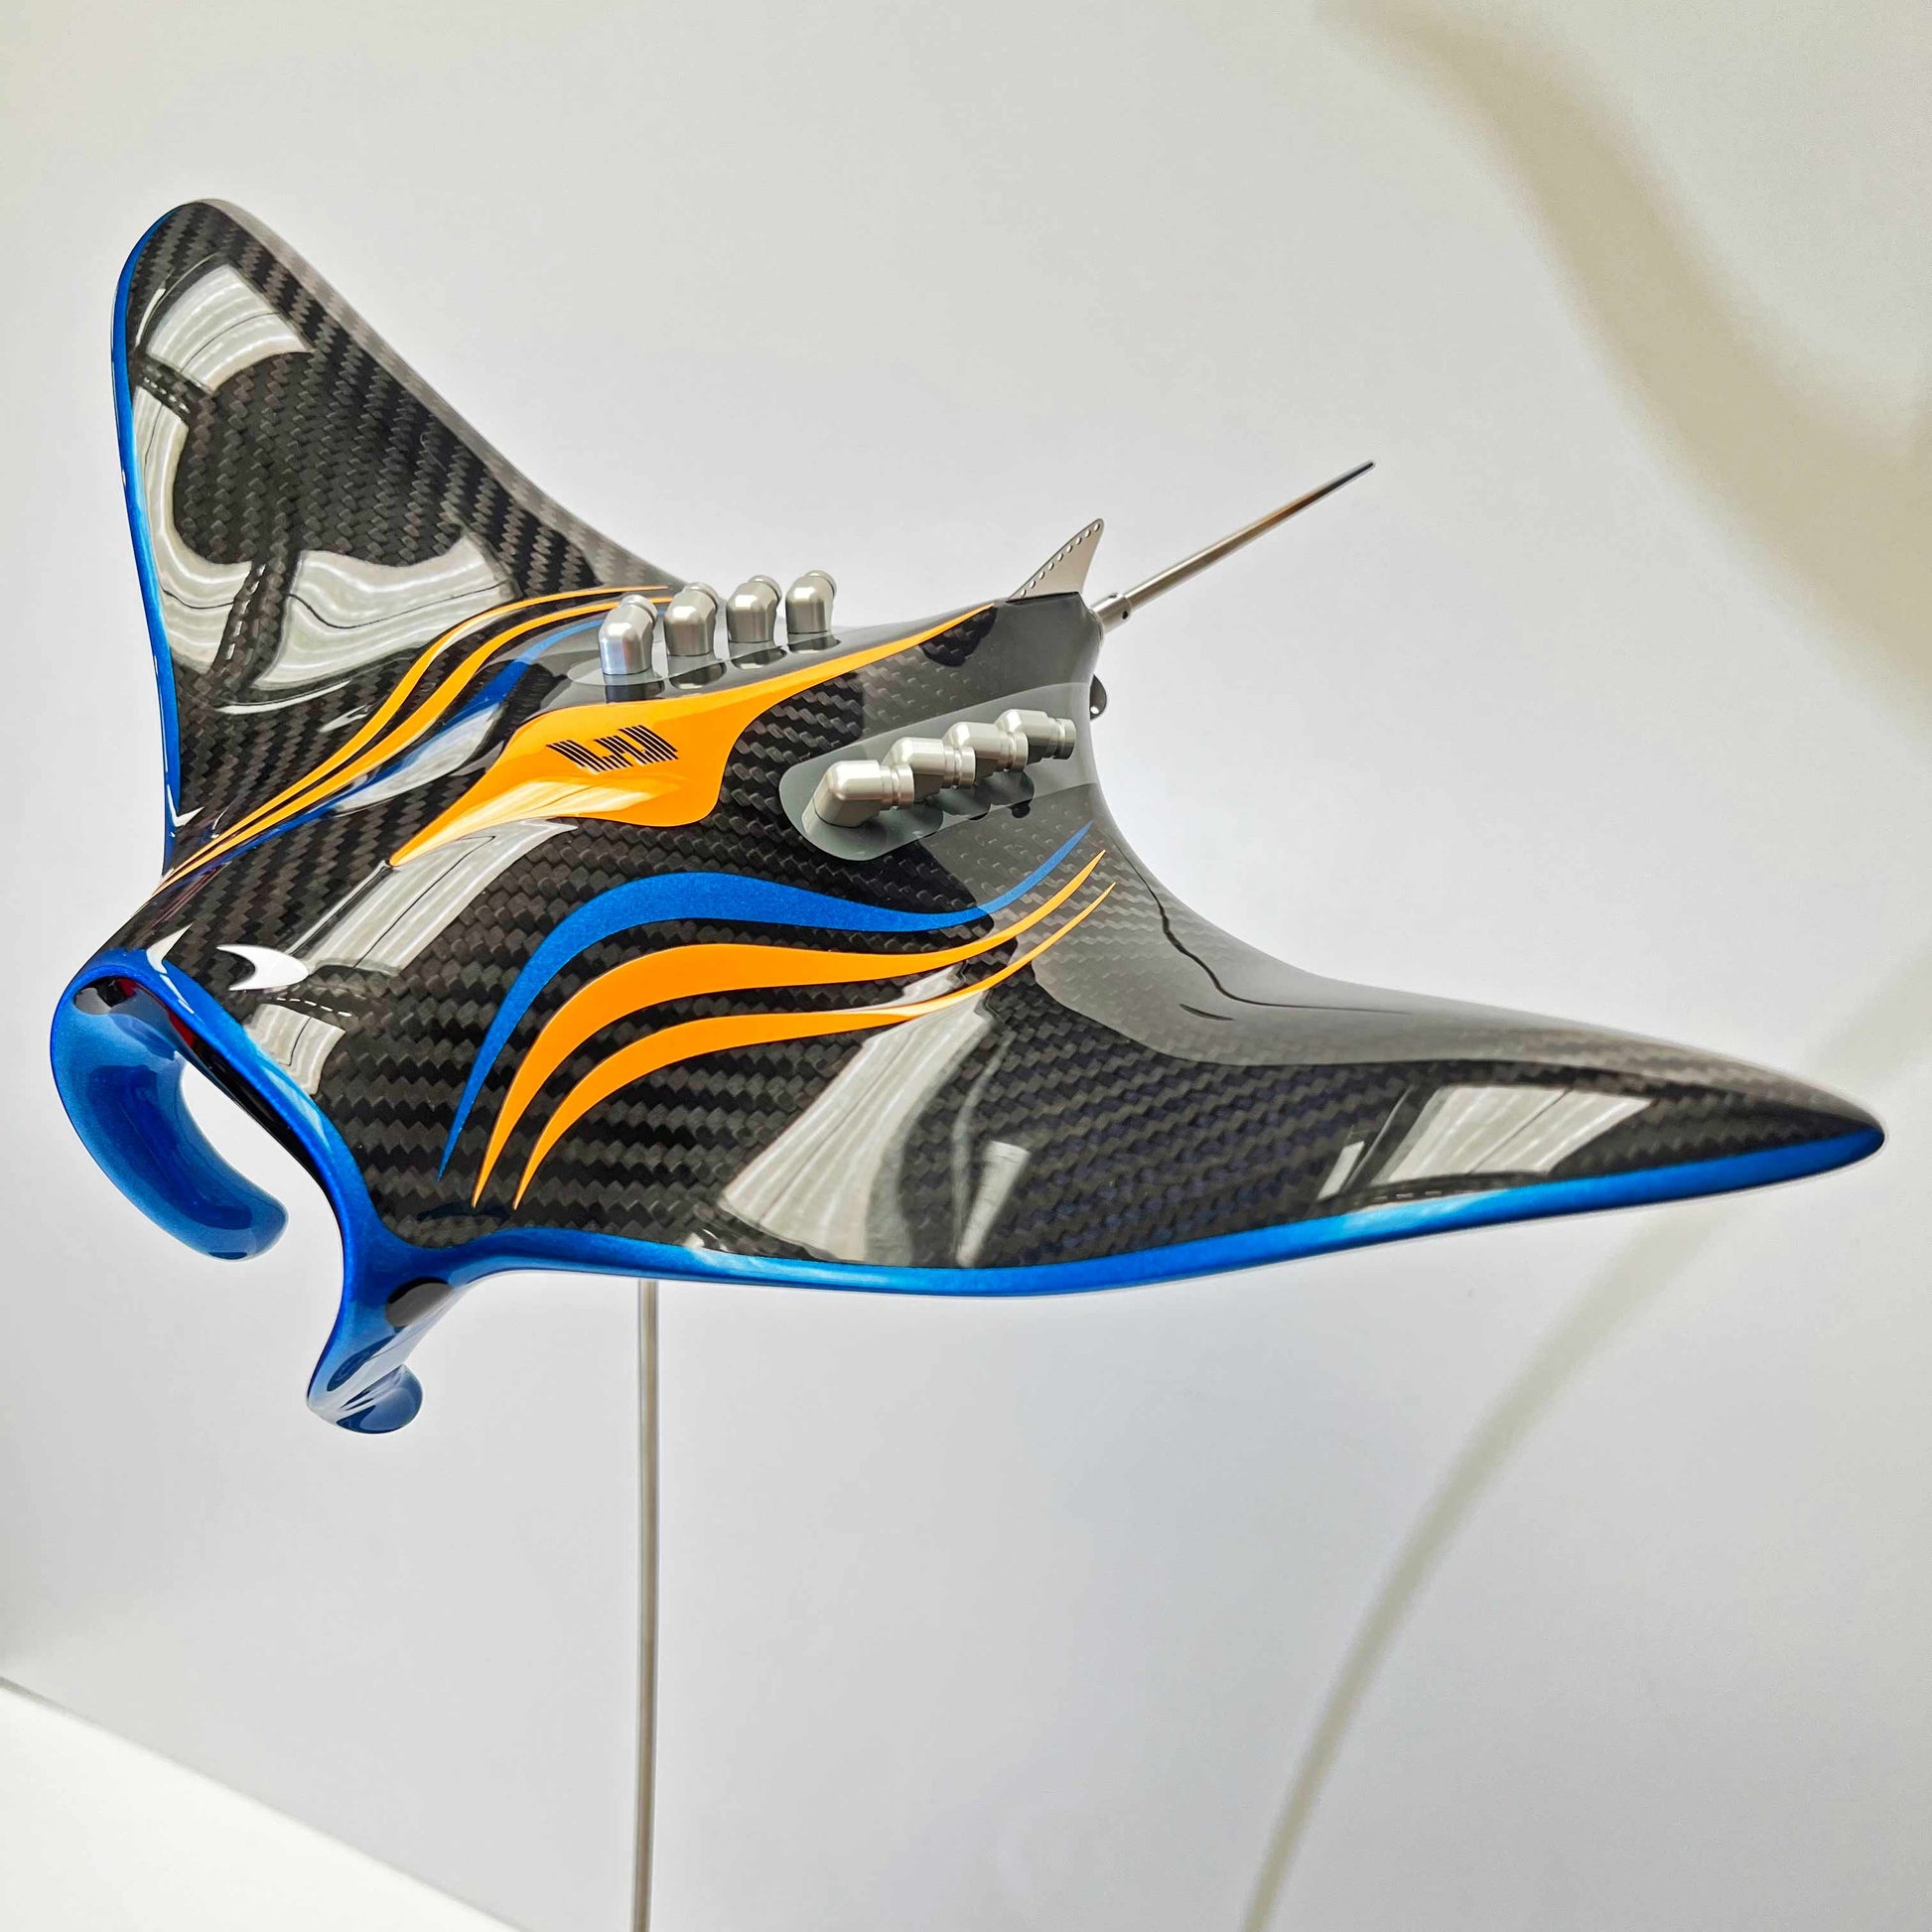 Carbon fibre manta ray sculpture with custom McLaren F1 livery 